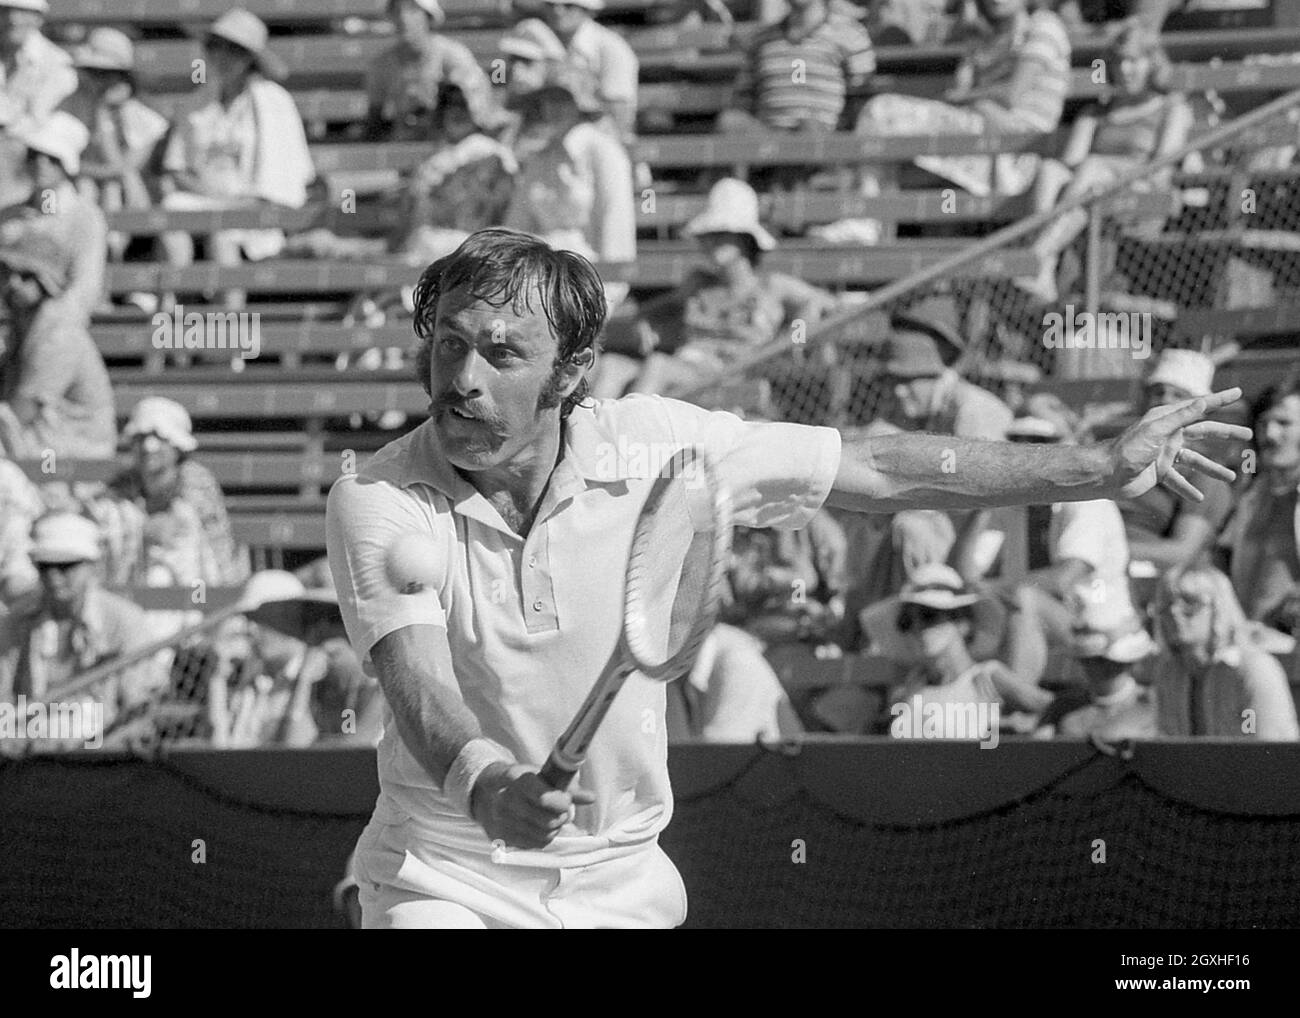 John Newcombe, Australian Open 1976, Halbfinale, Kooyong Lawn Tennis Club, 26. Dez. 1975 - 4. Jan.1976, Melbourne. Stockfoto